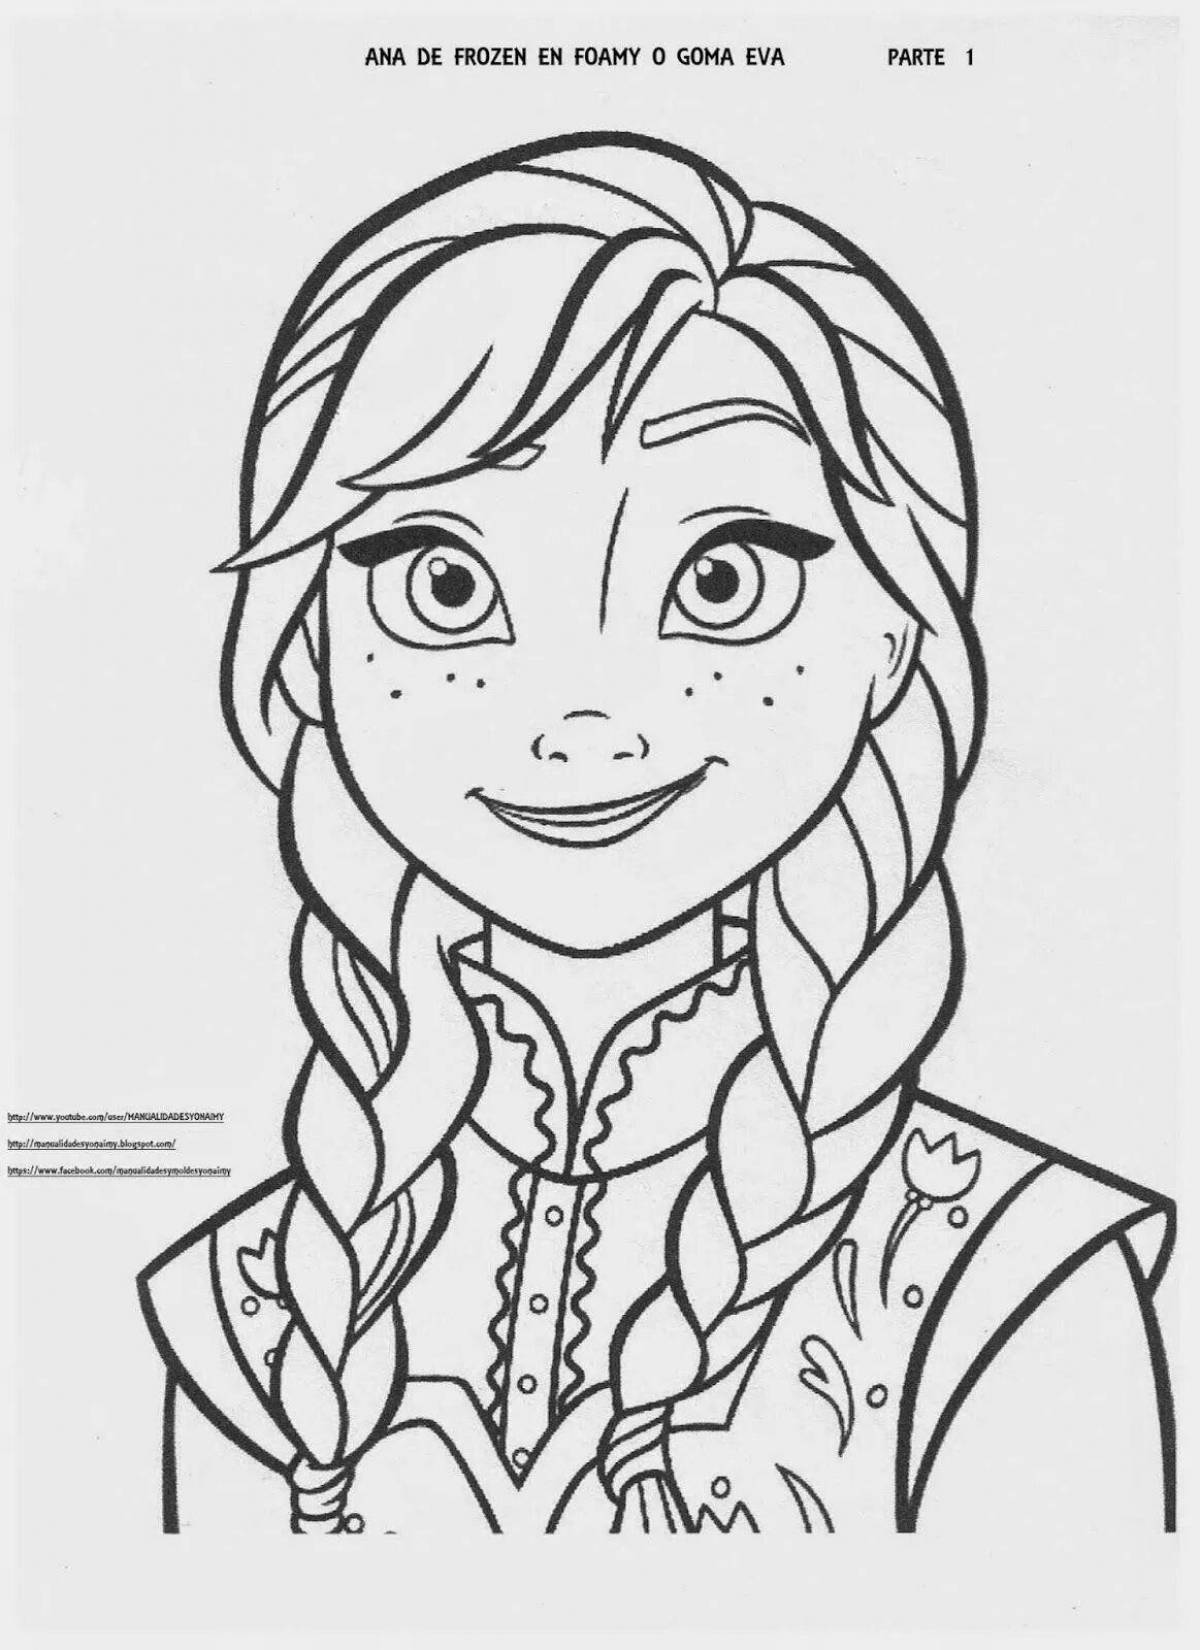 Elsa's majestic face painting